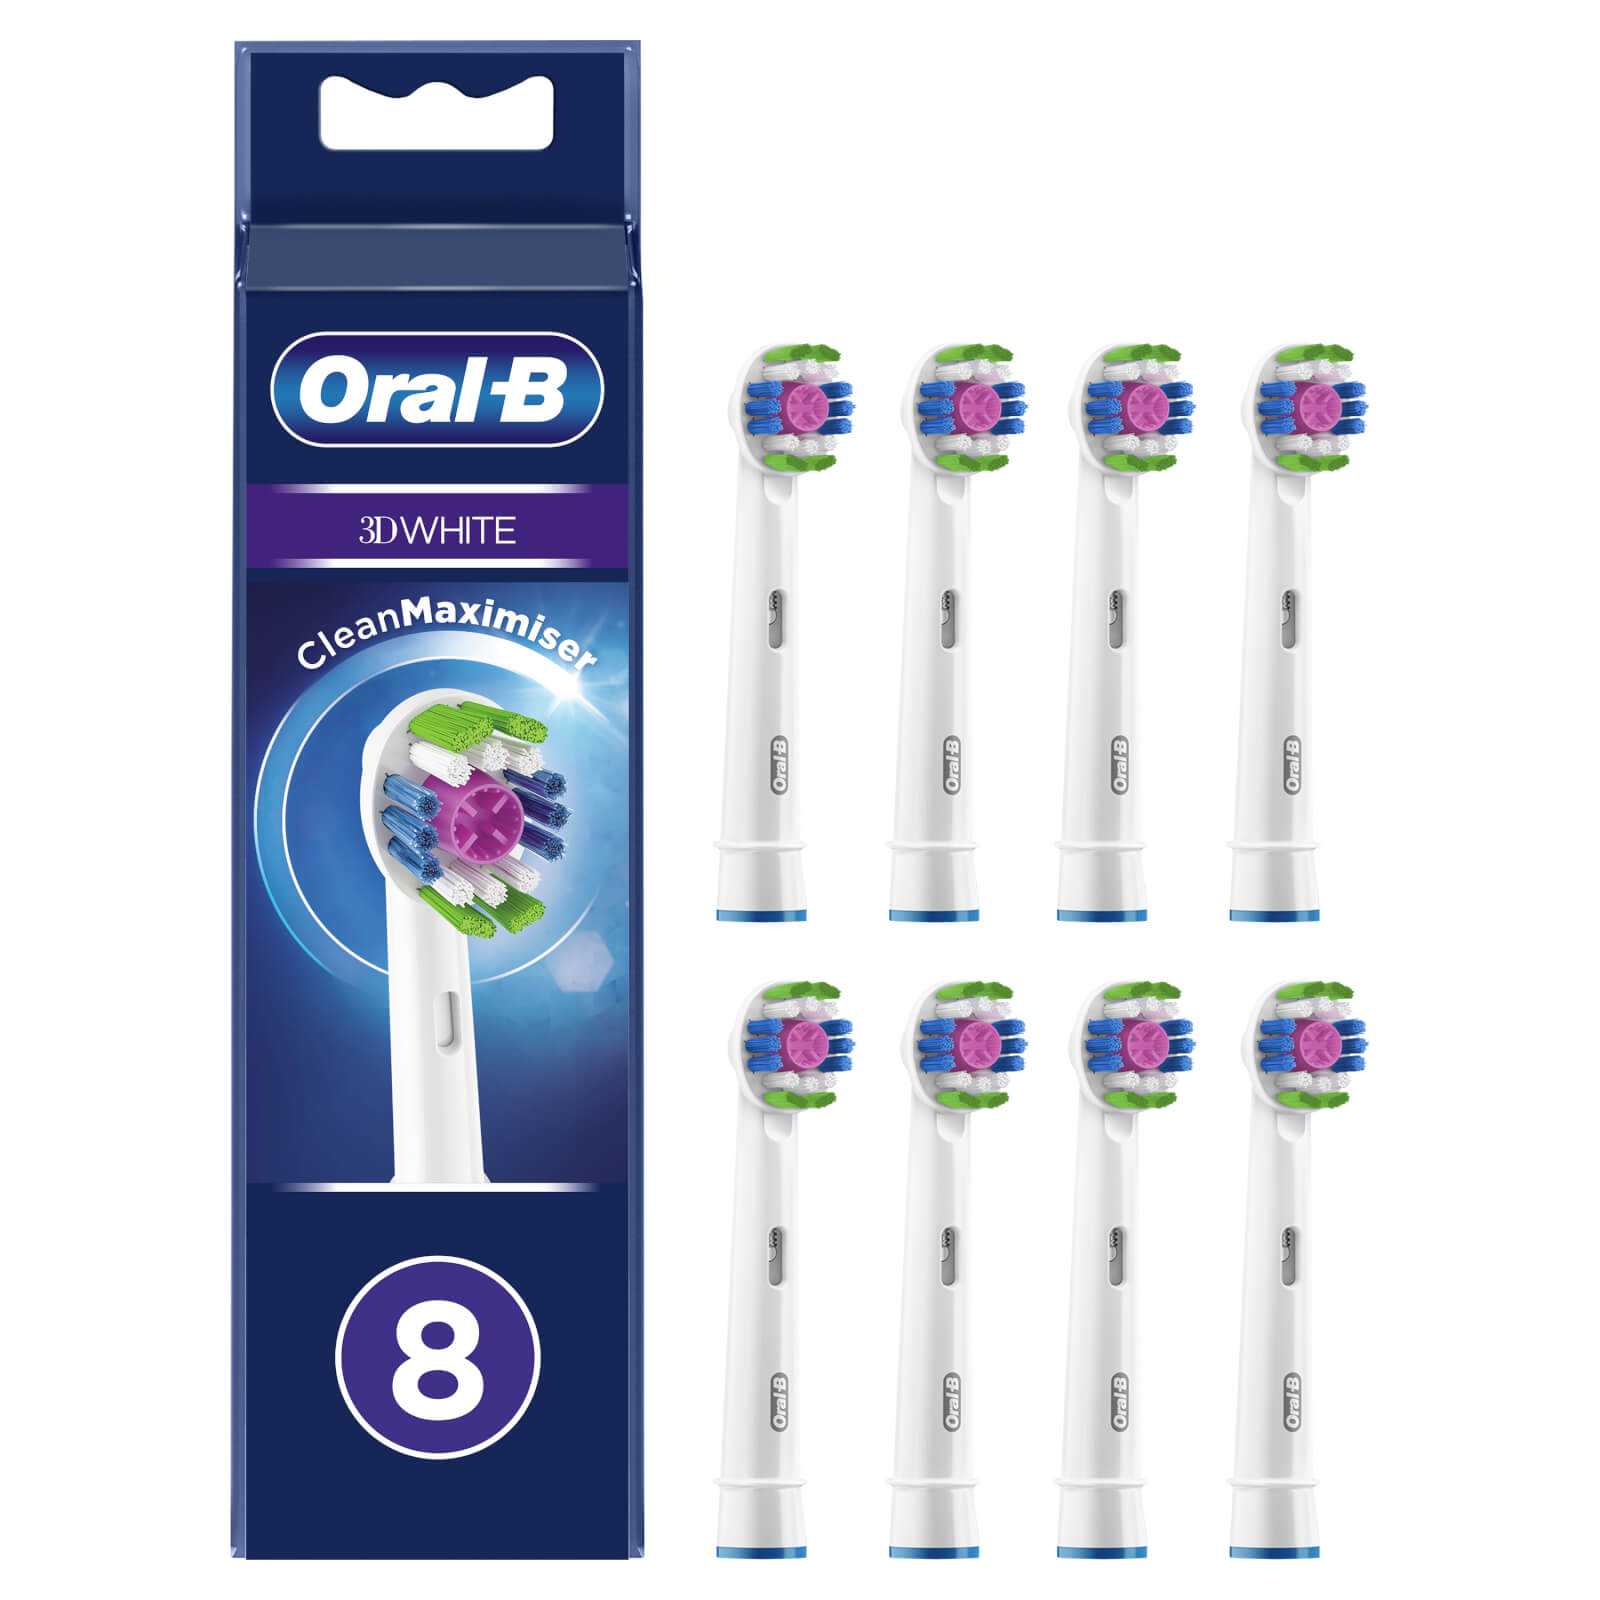 Dental Oral-B 3D White Brush Head with Clean Maximiser - 8 Counts